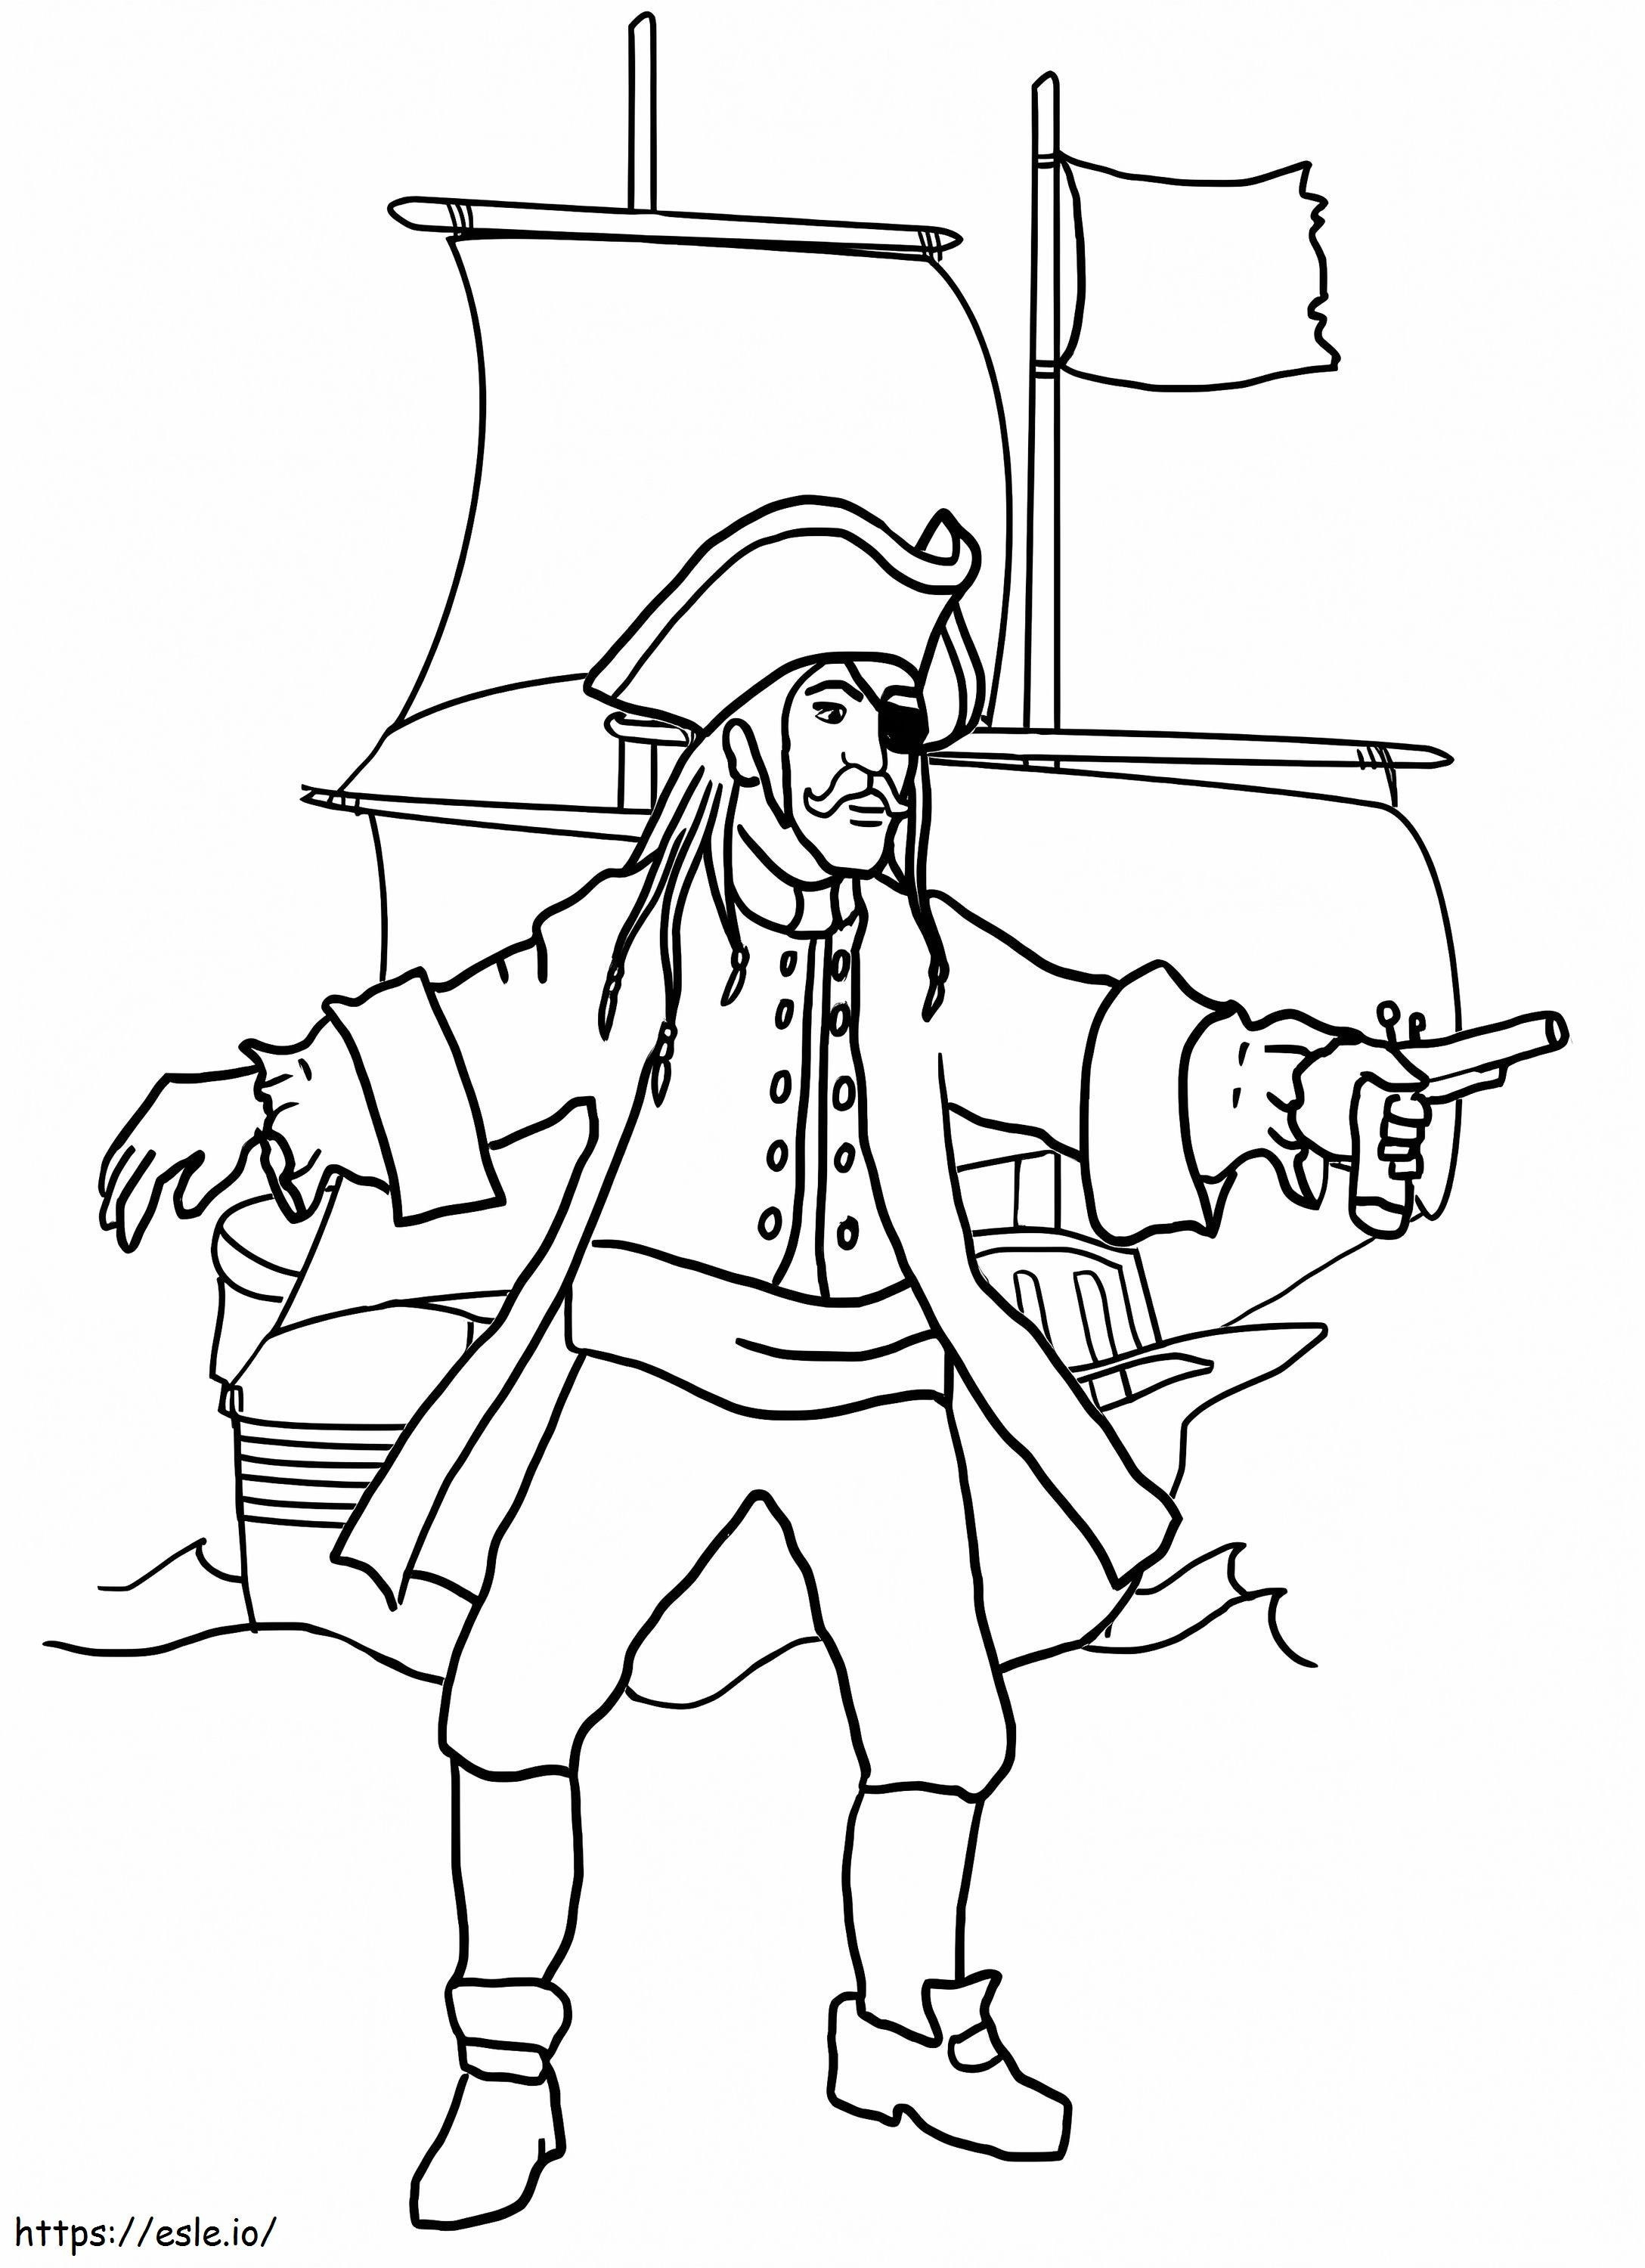 Pirat I Statek Piracki kolorowanka